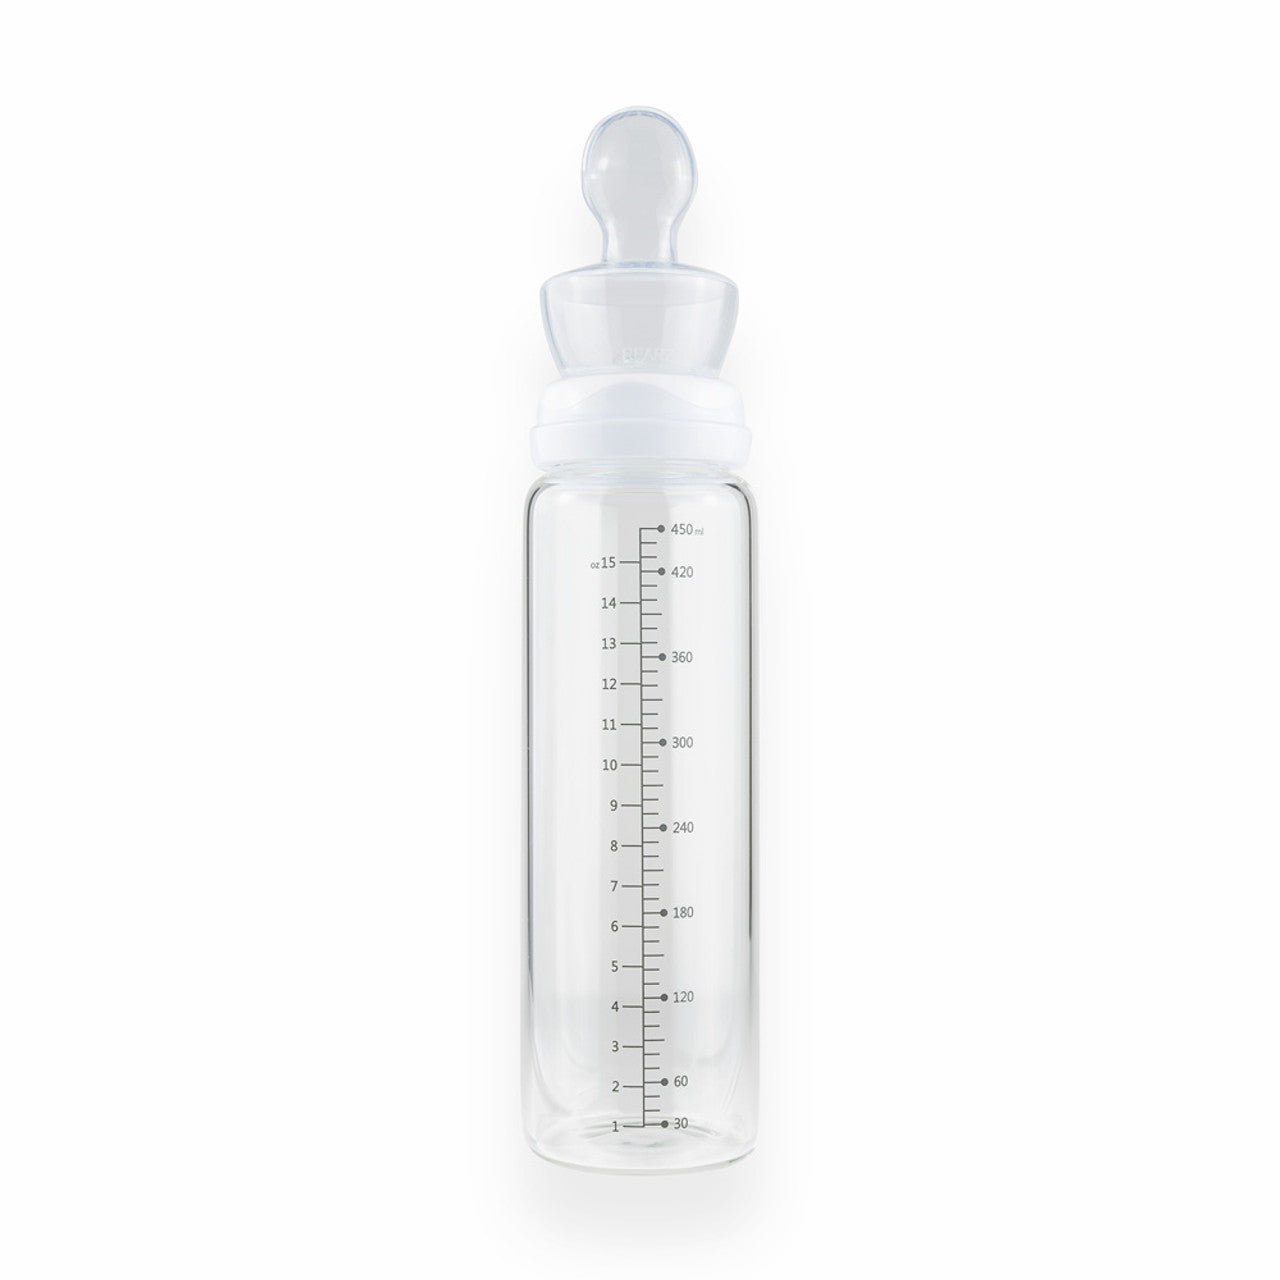 Rearz - Adult Silicone Bottle Nipple - XXL